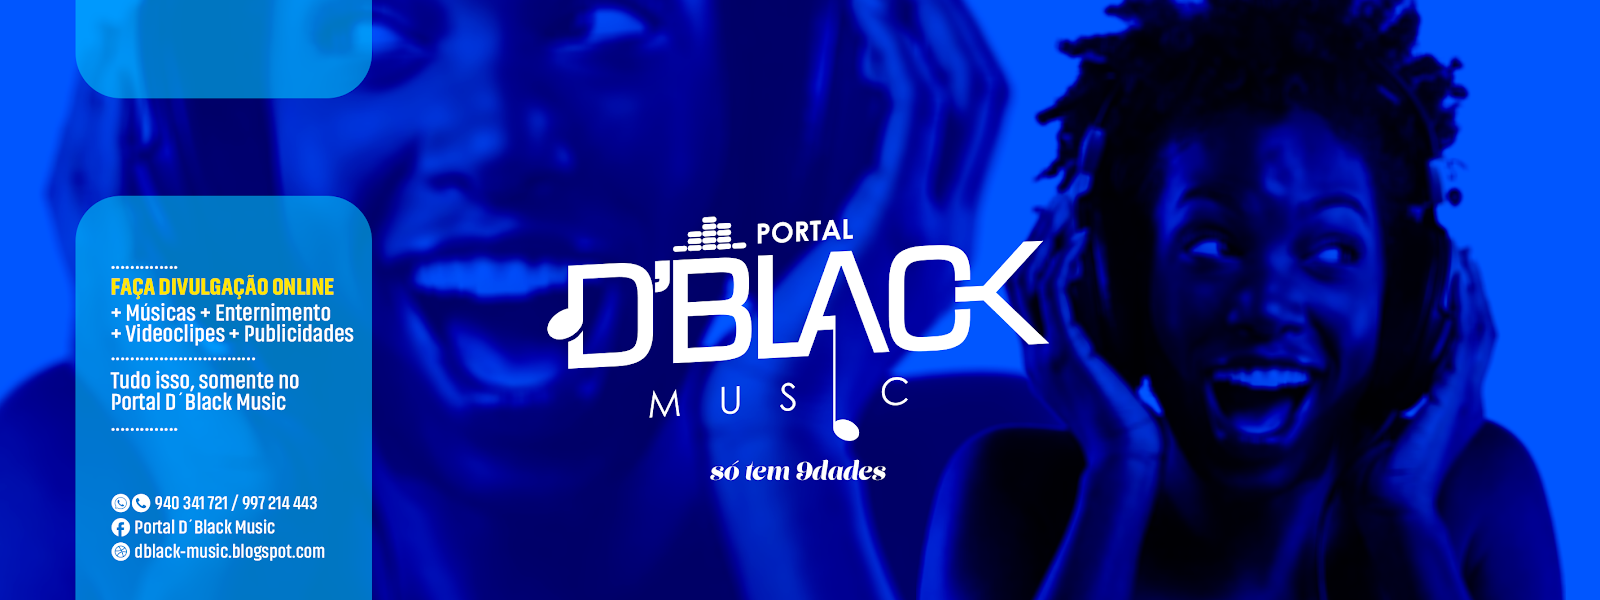 Portal D'black Music |DOWNLOAD MP3